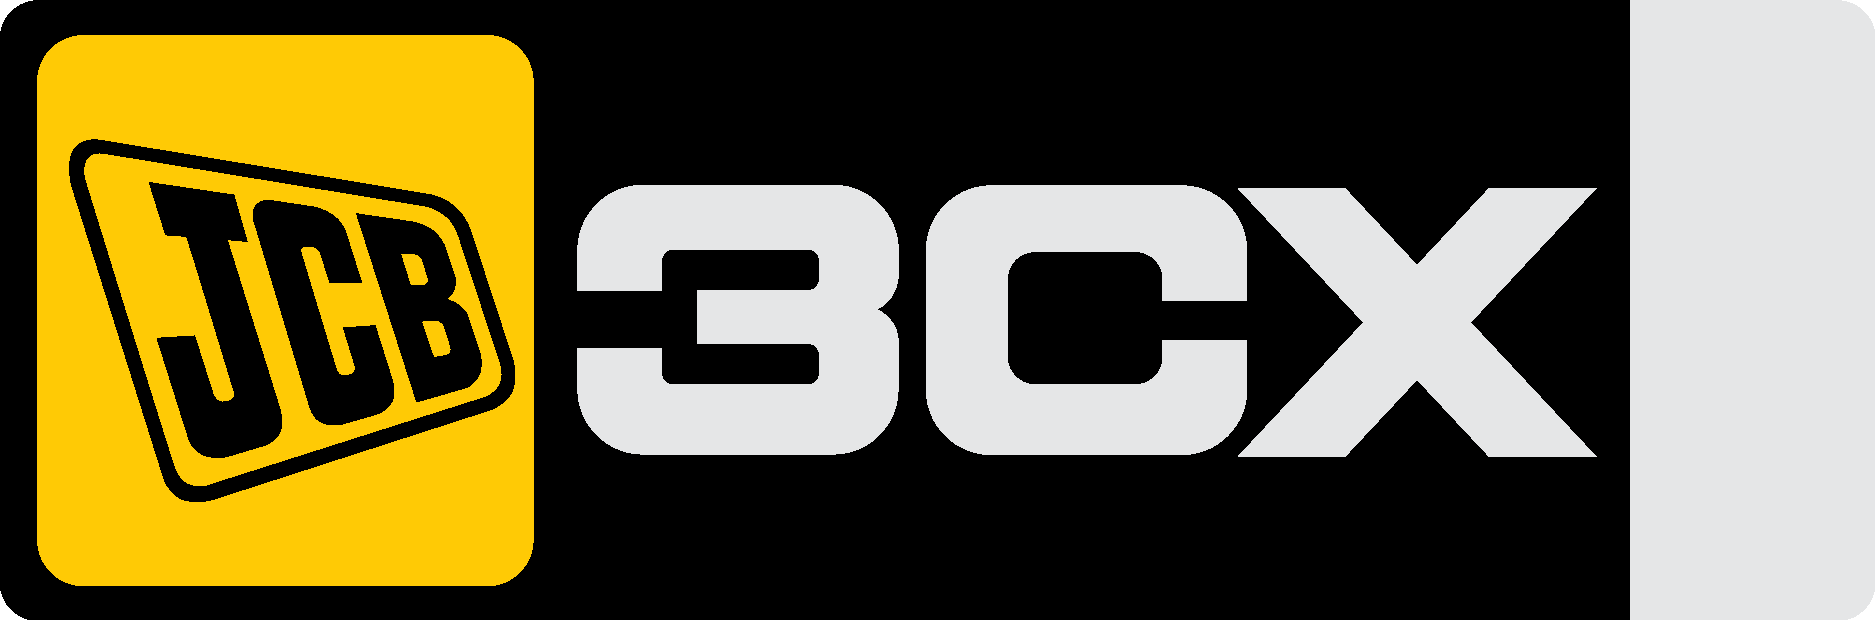 jcb logo vector